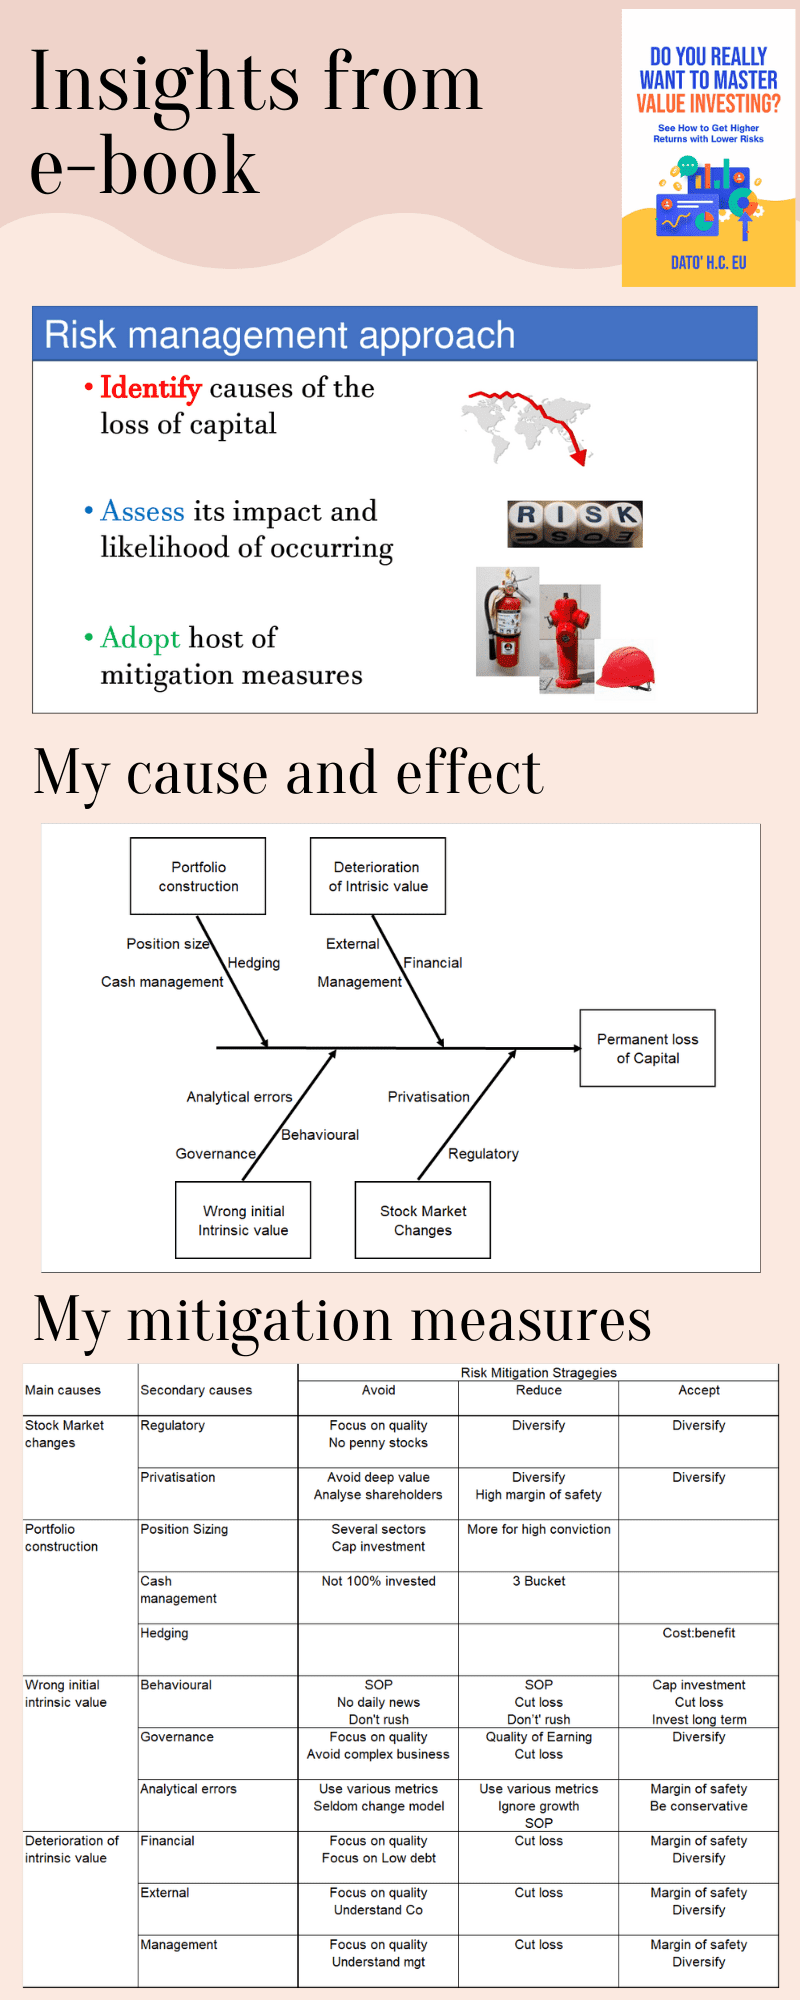 My risk mitigation framework